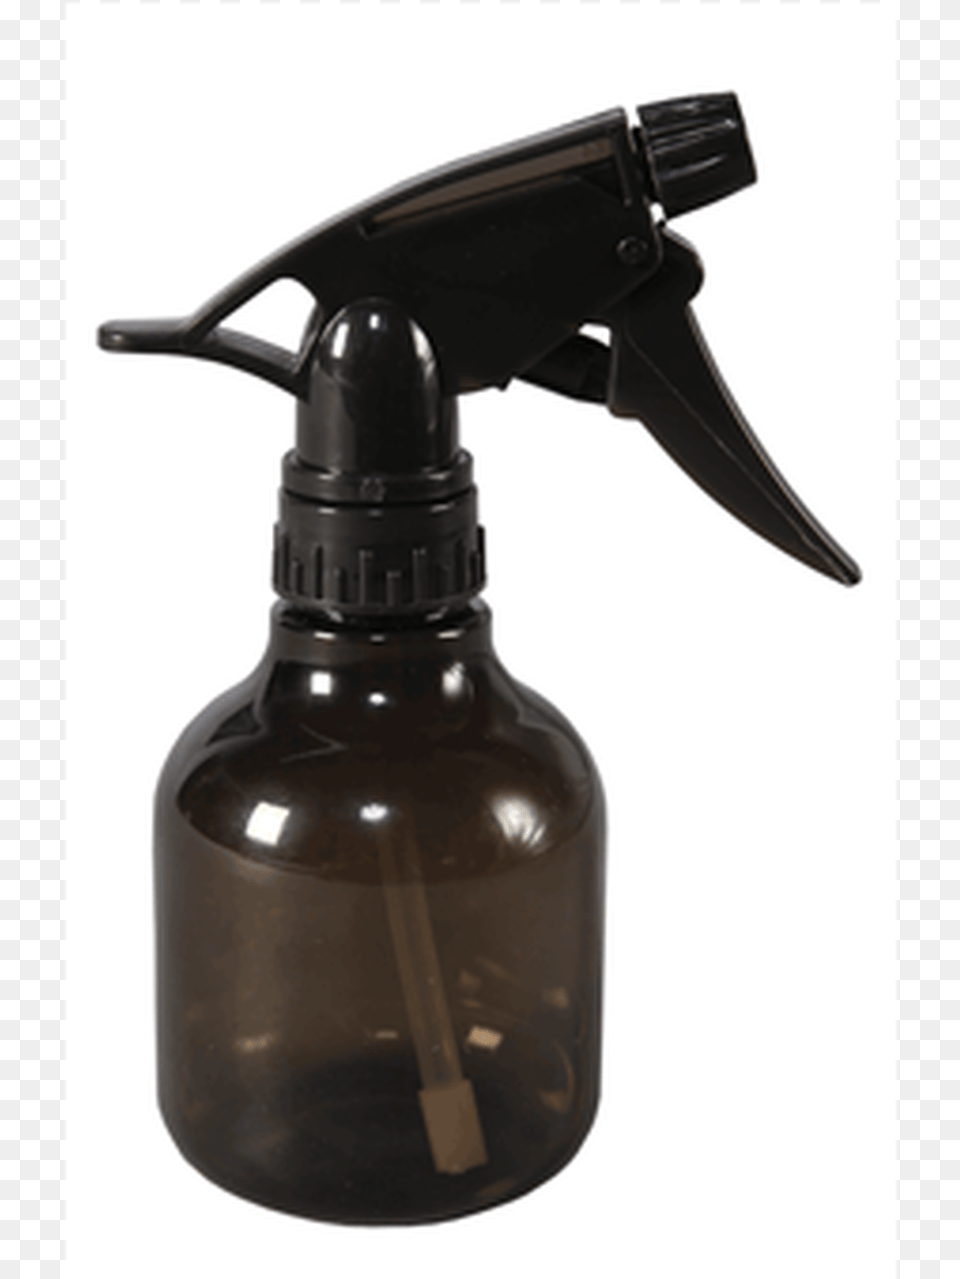 Empty Spray Bottle Smoke Pte 8oz Sprayer, Can, Spray Can, Tin, Smoke Pipe Free Transparent Png